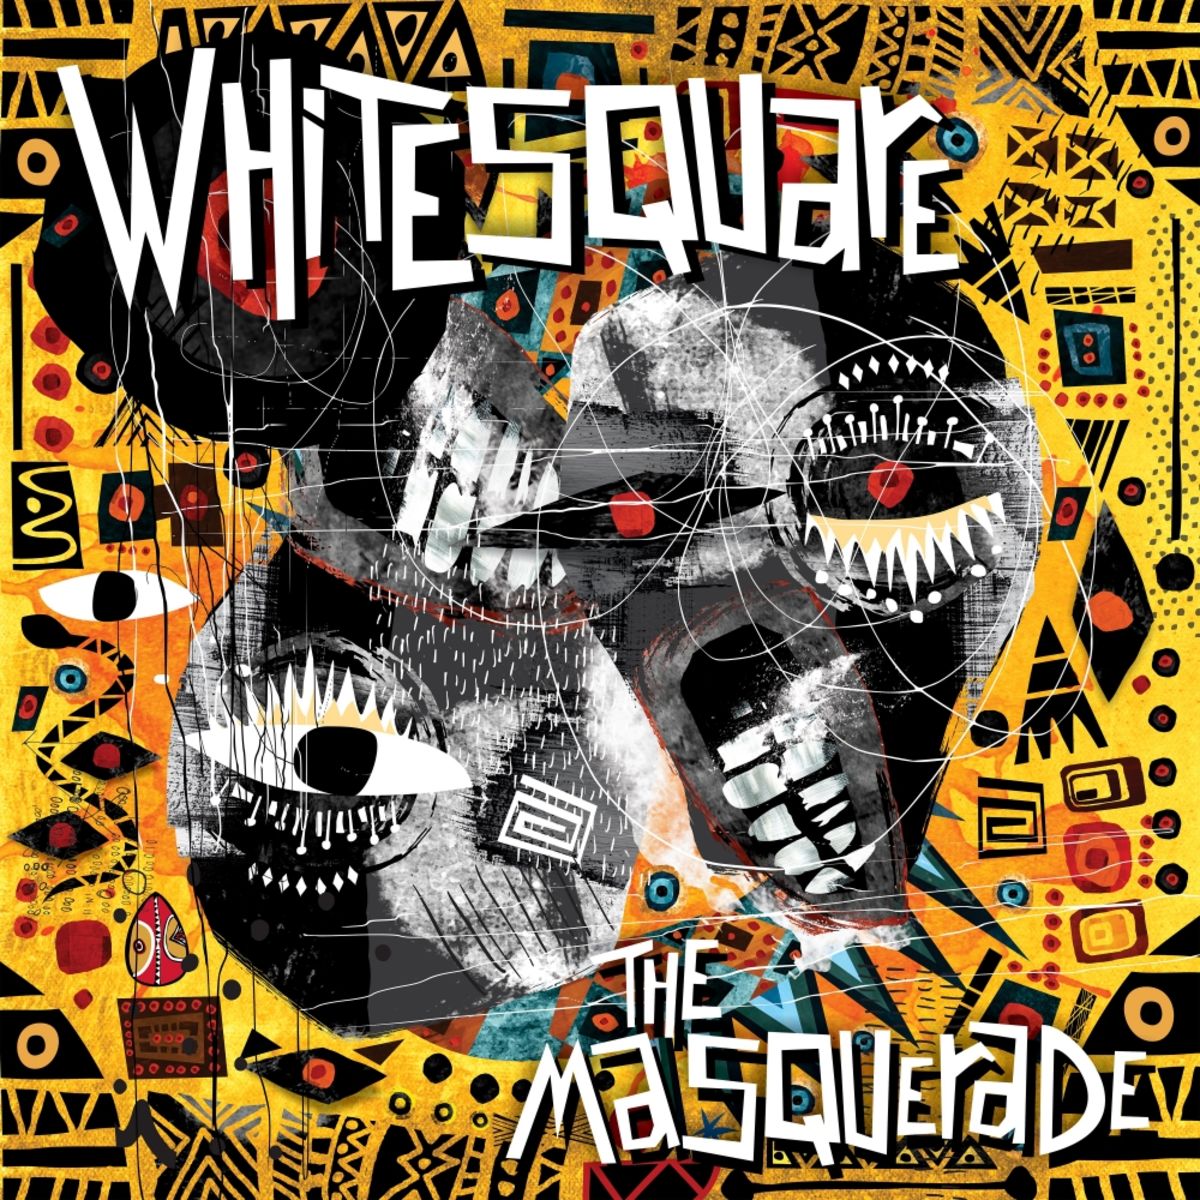 Whitesquare - The Masquerade / Gruuv